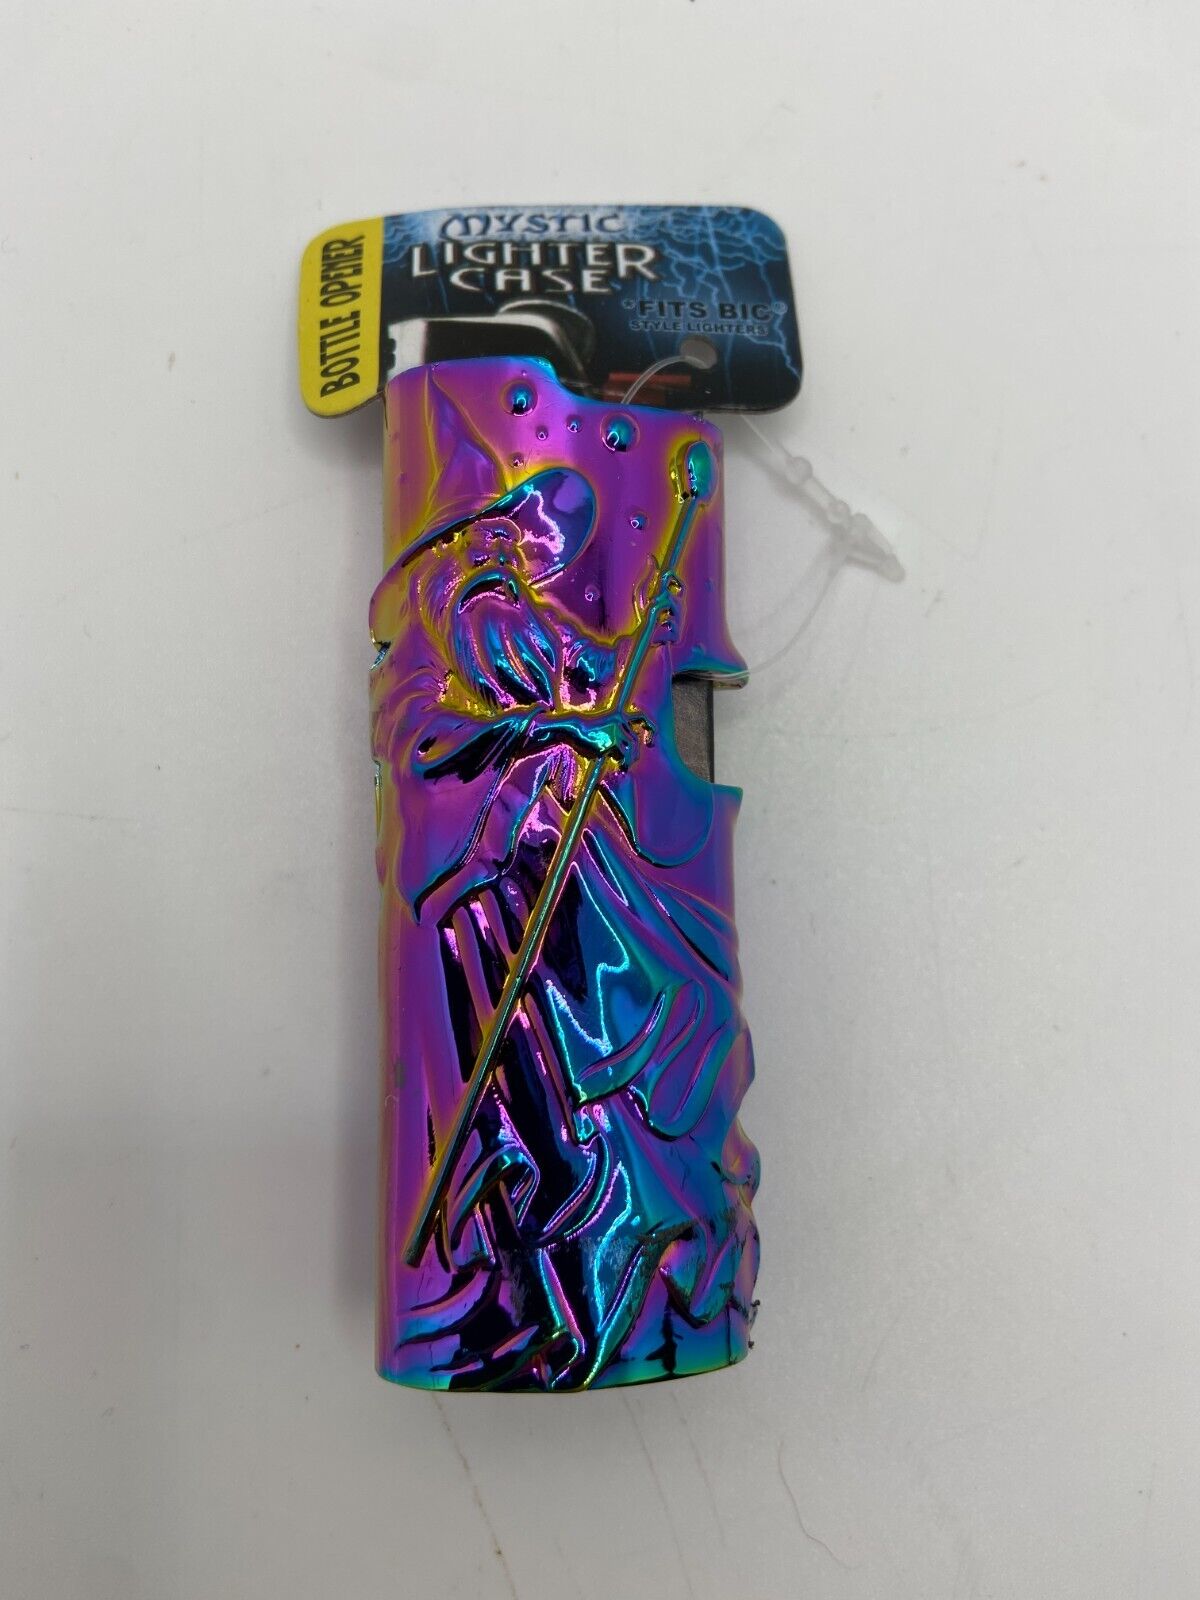 Lighter case [Rainbow] Fits Bic Style Lighters J6 Smokezilla